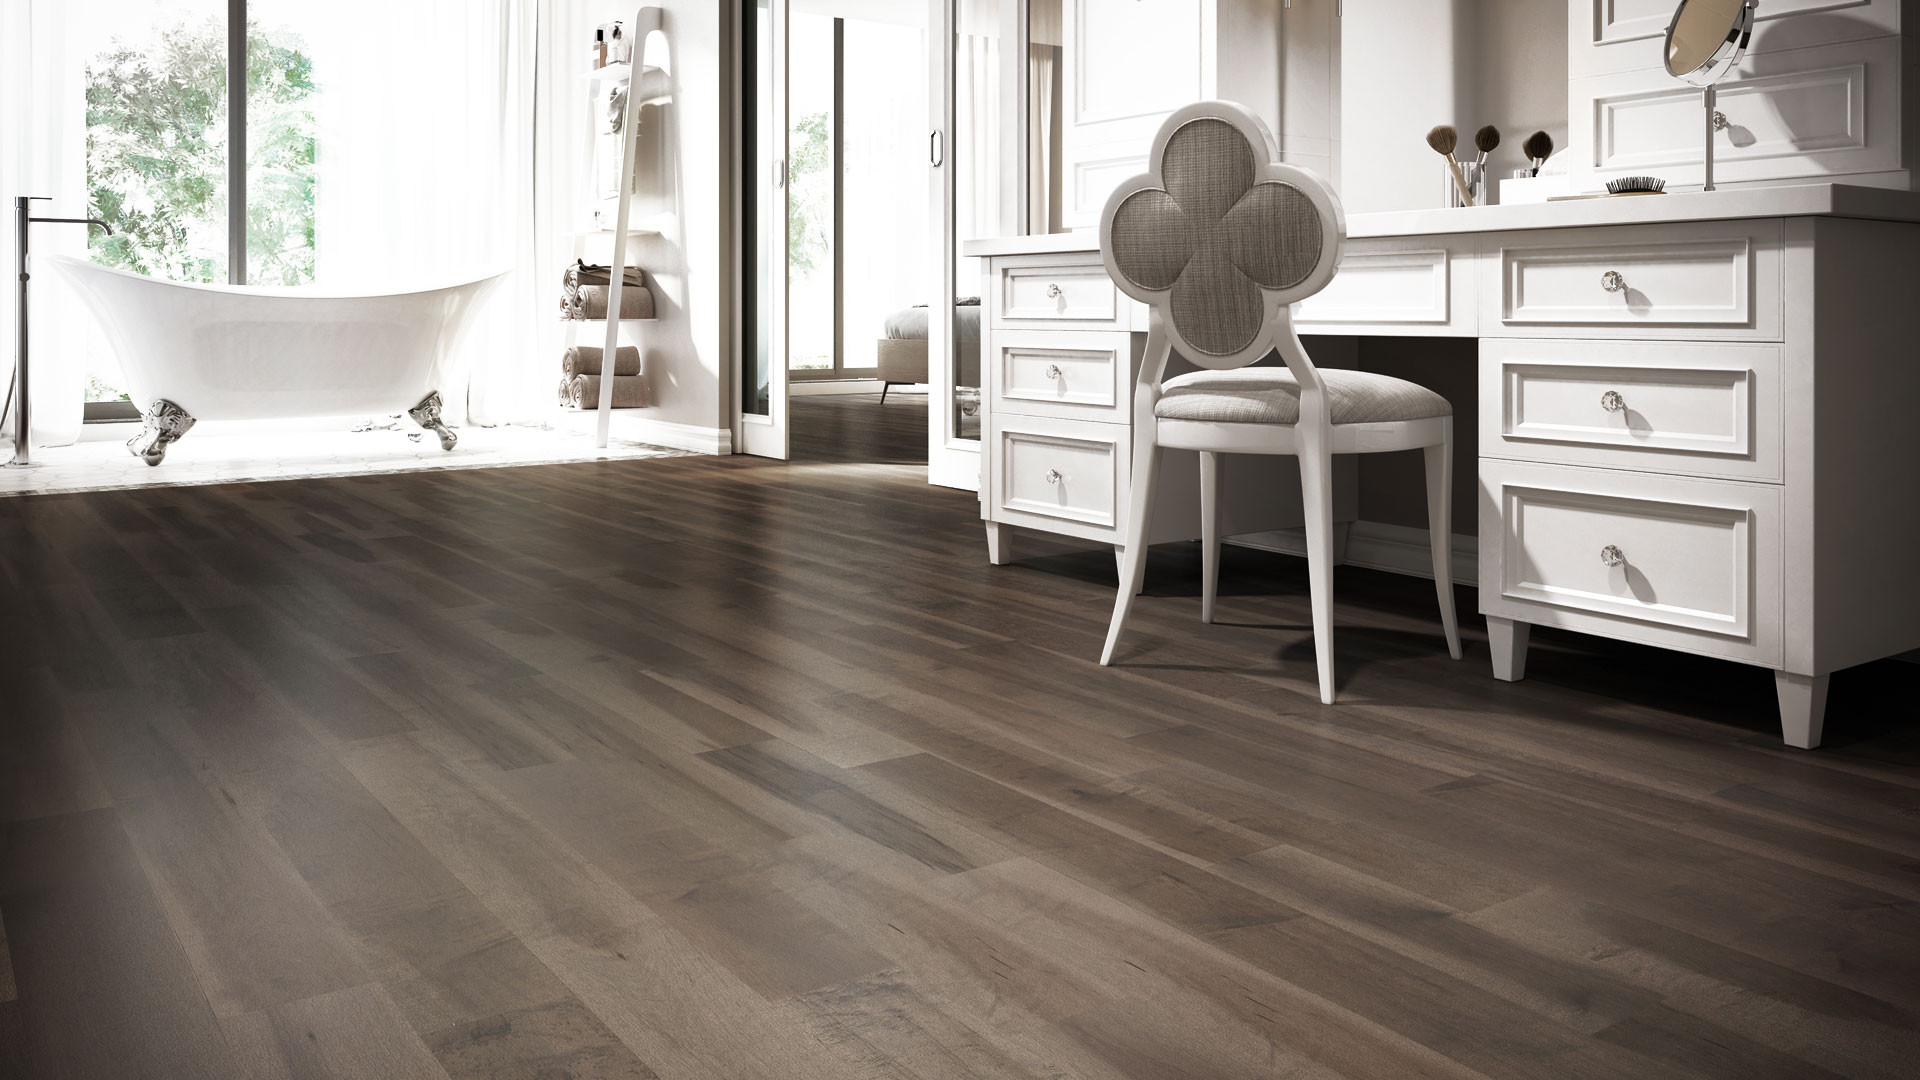 most popular engineered hardwood flooring color of 4 latest hardwood flooring trends lauzon flooring throughout top 4 hardwood flooring trends